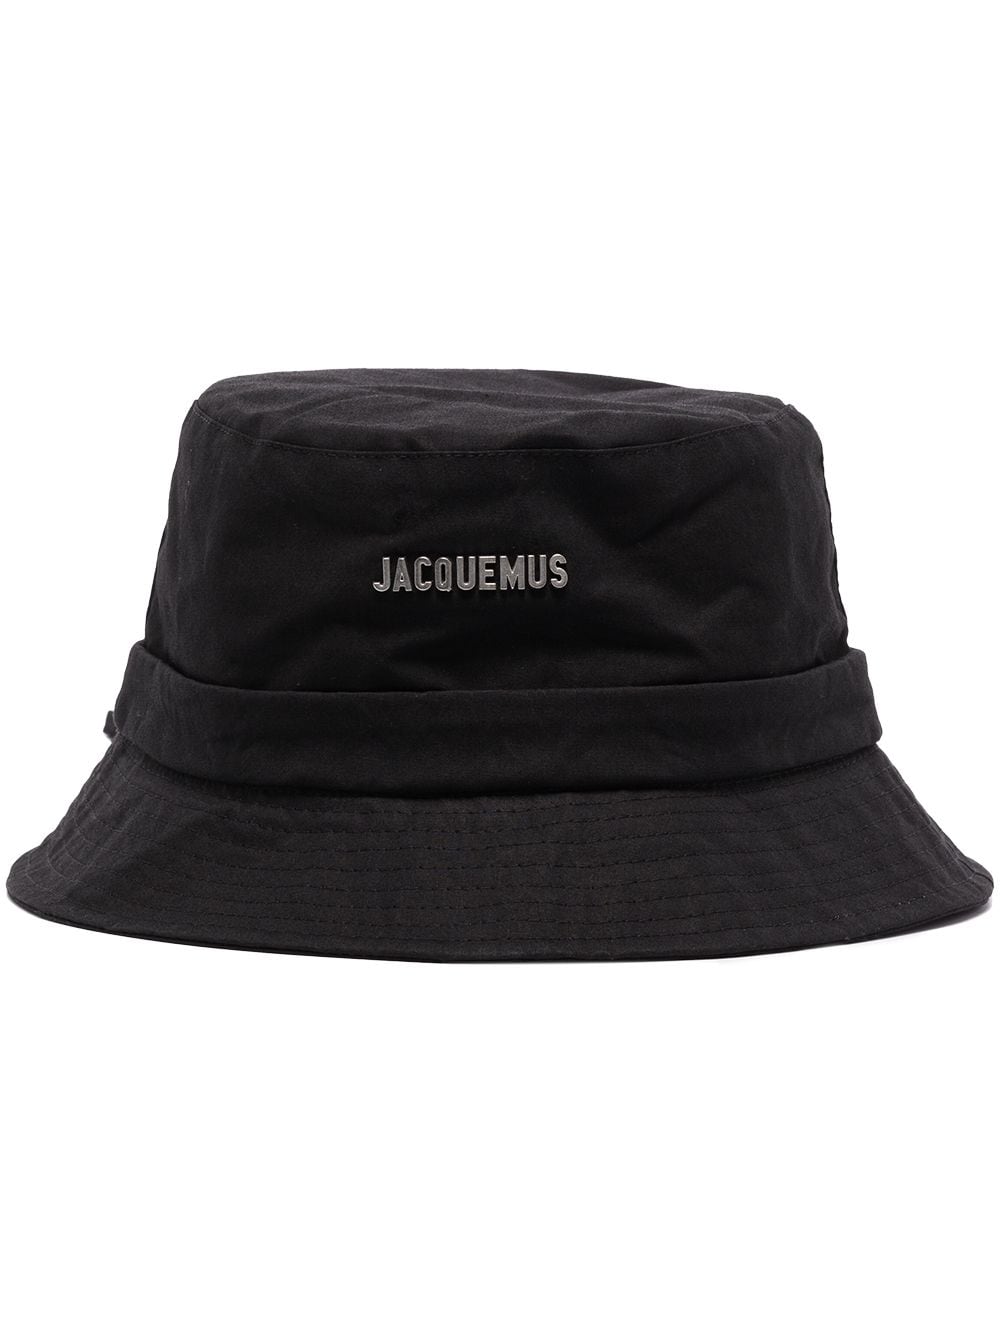 Jacquemus Black Le Bob Gadjo Bucket Hat